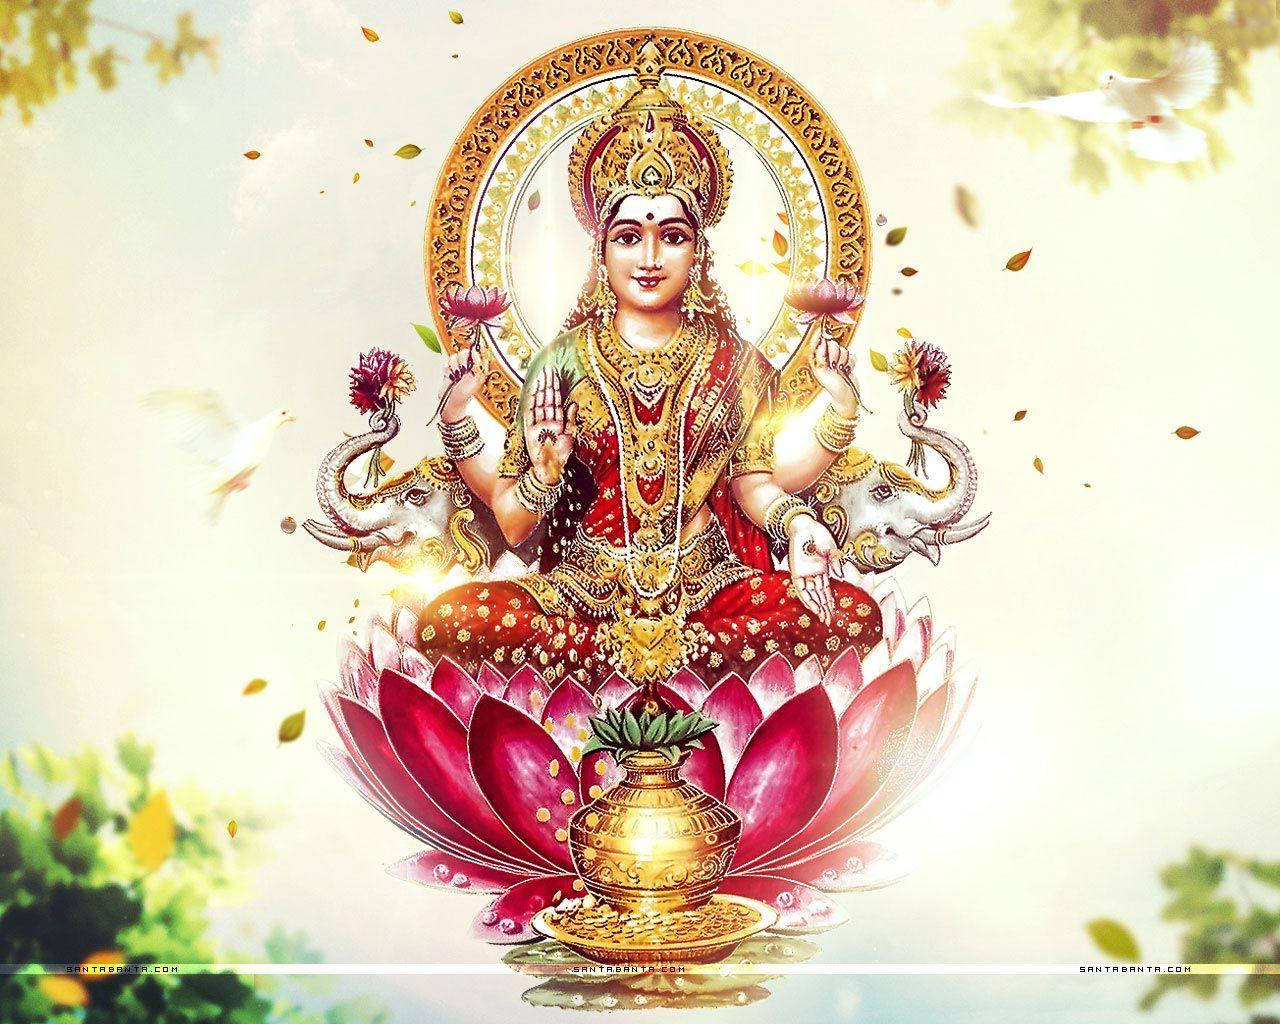 Download Lakshmi Of Hindu Mythology Wallpaper | Wallpapers.com